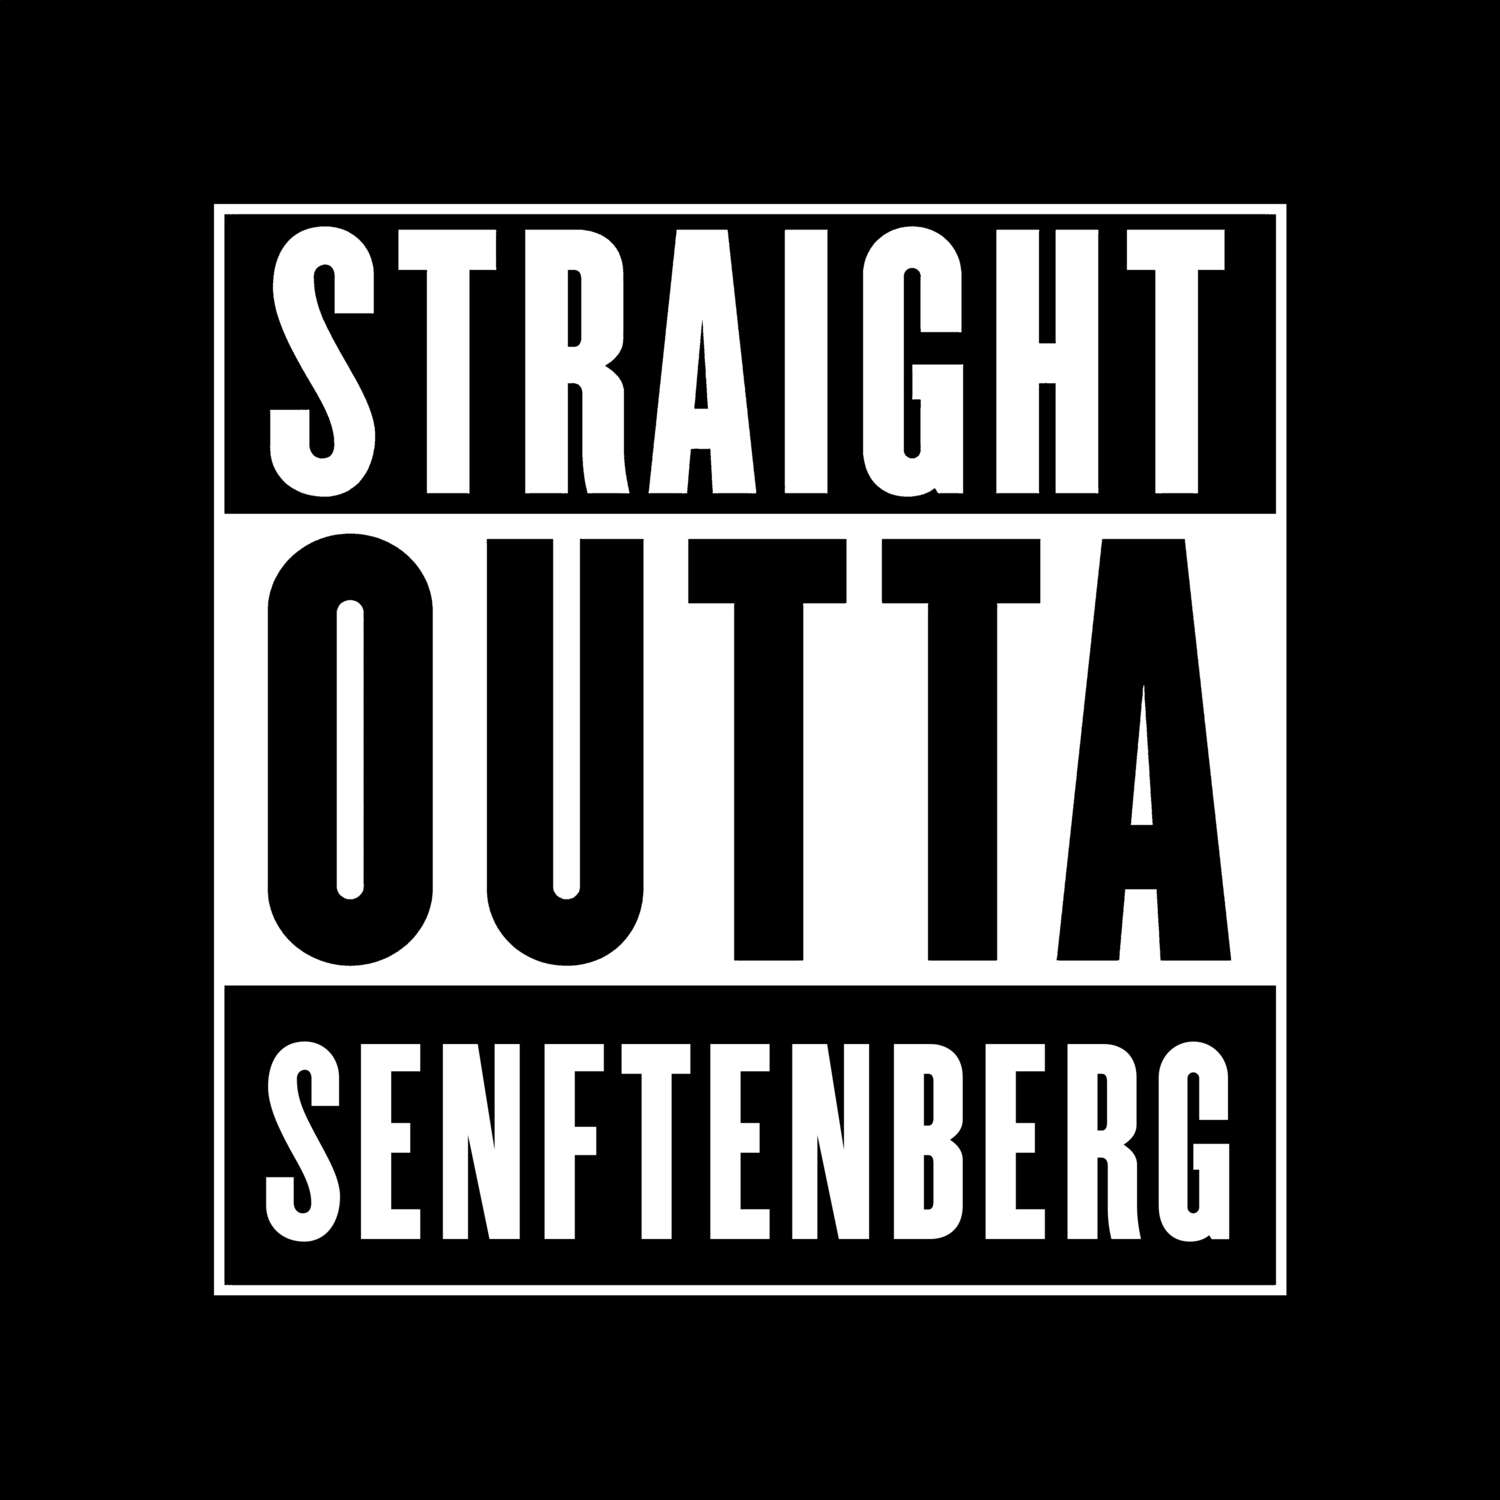 Senftenberg T-Shirt »Straight Outta«